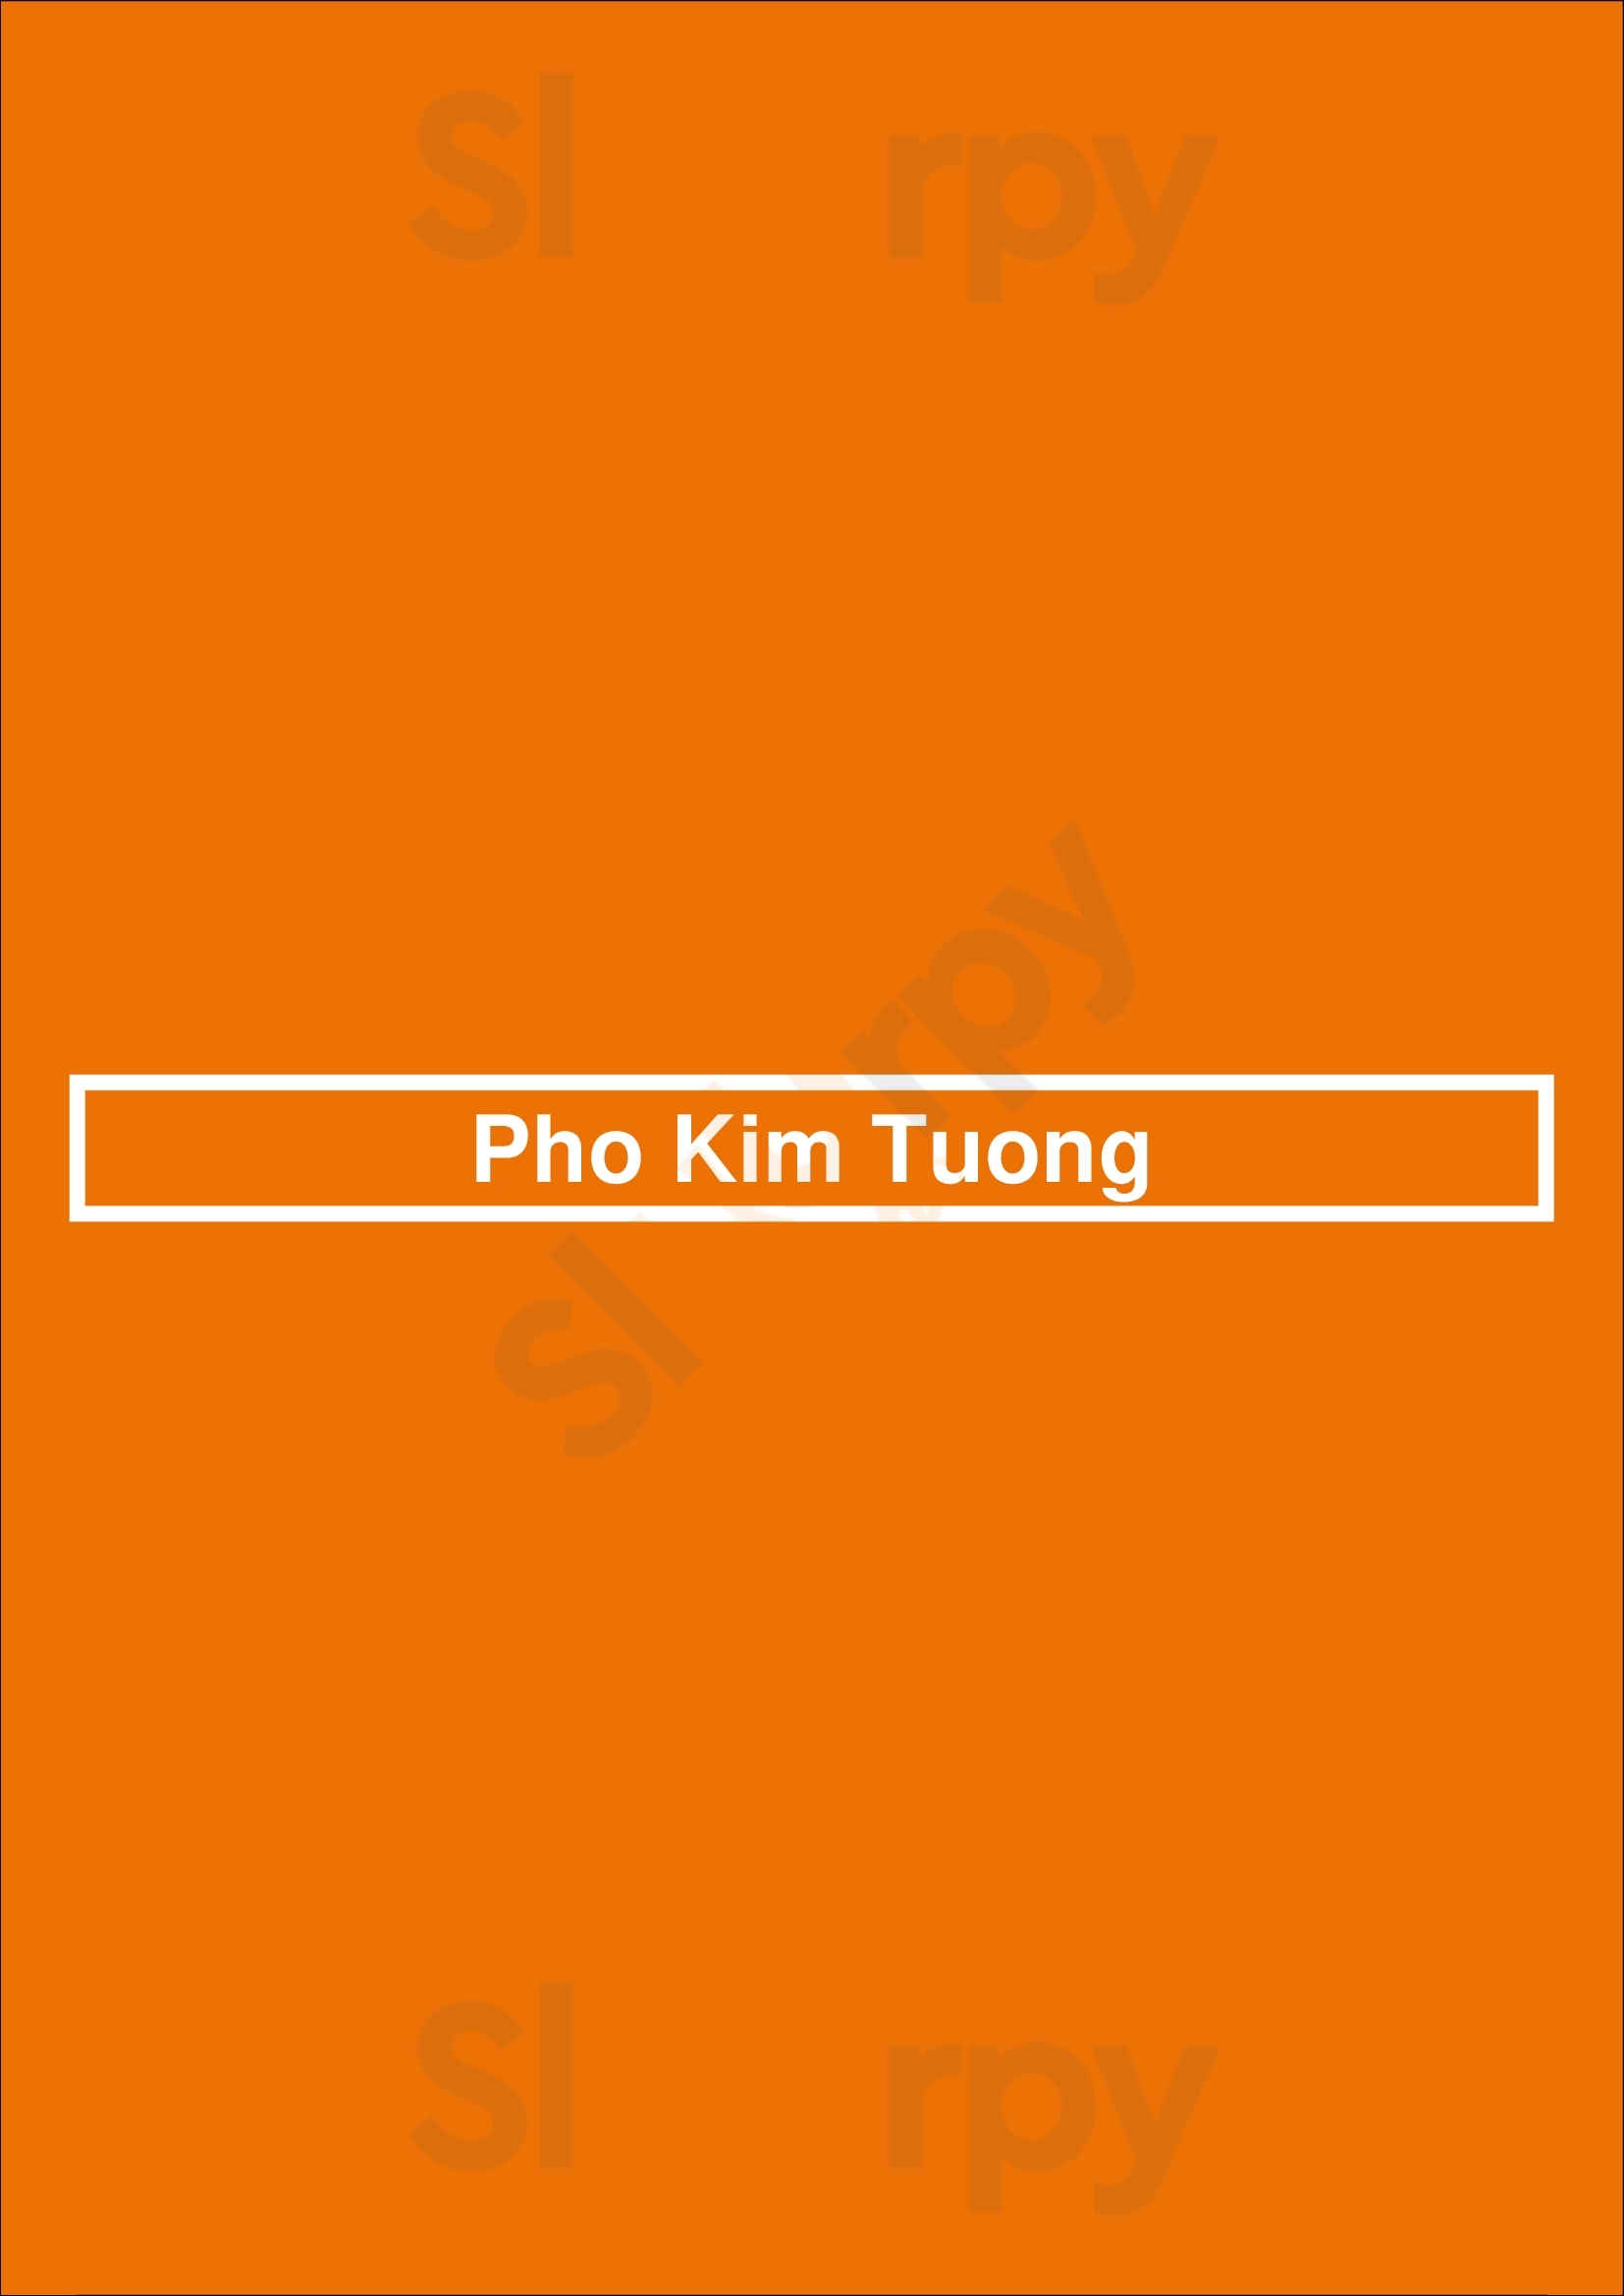 Pho Kim Tuong Winnipeg Menu - 1